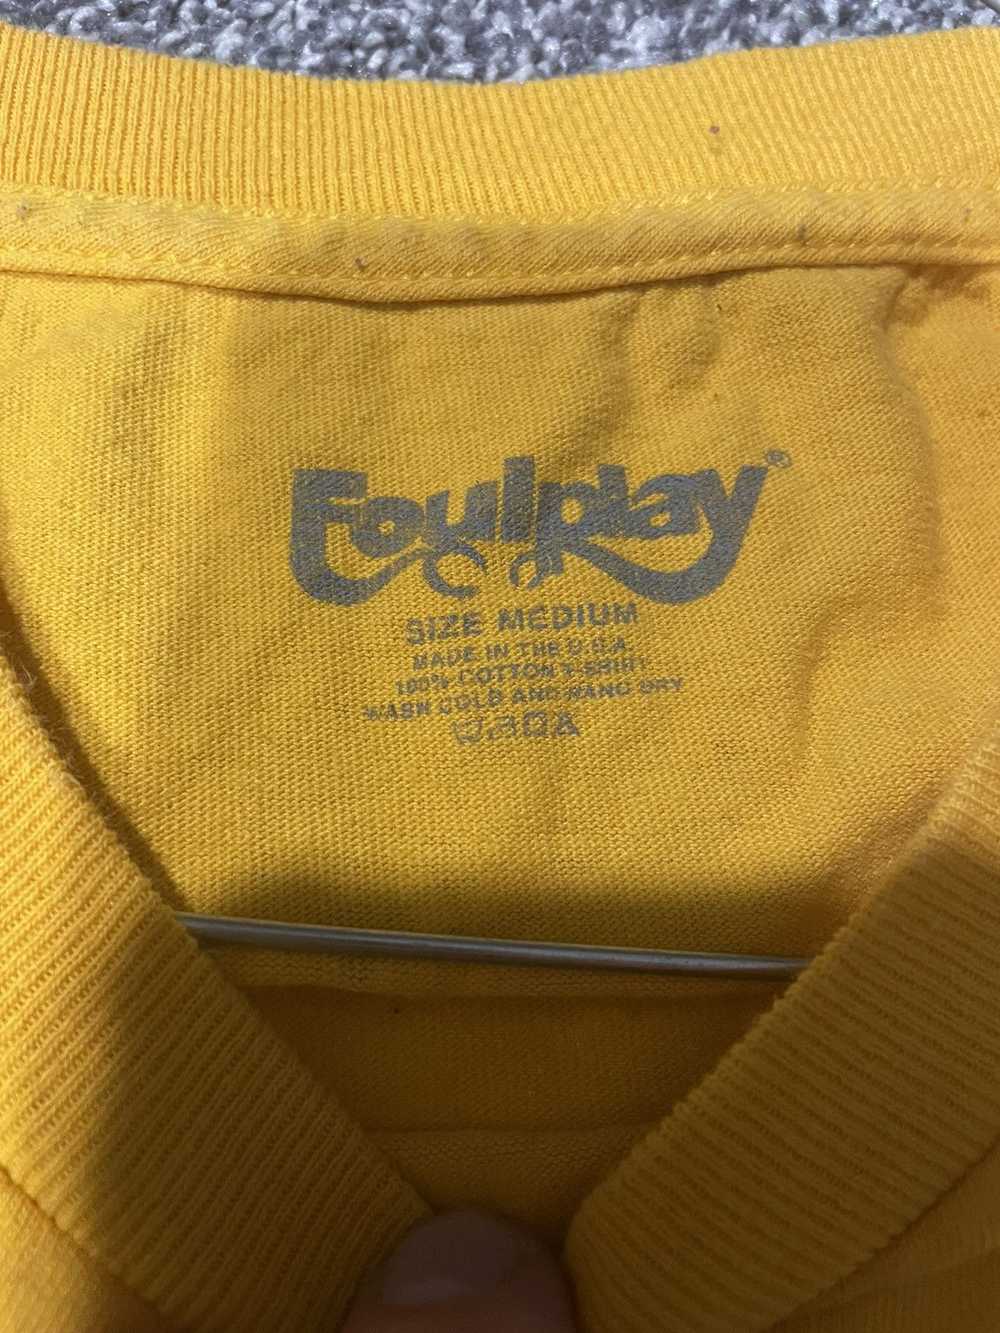 Foulplay Company Foulplay shirt - image 6